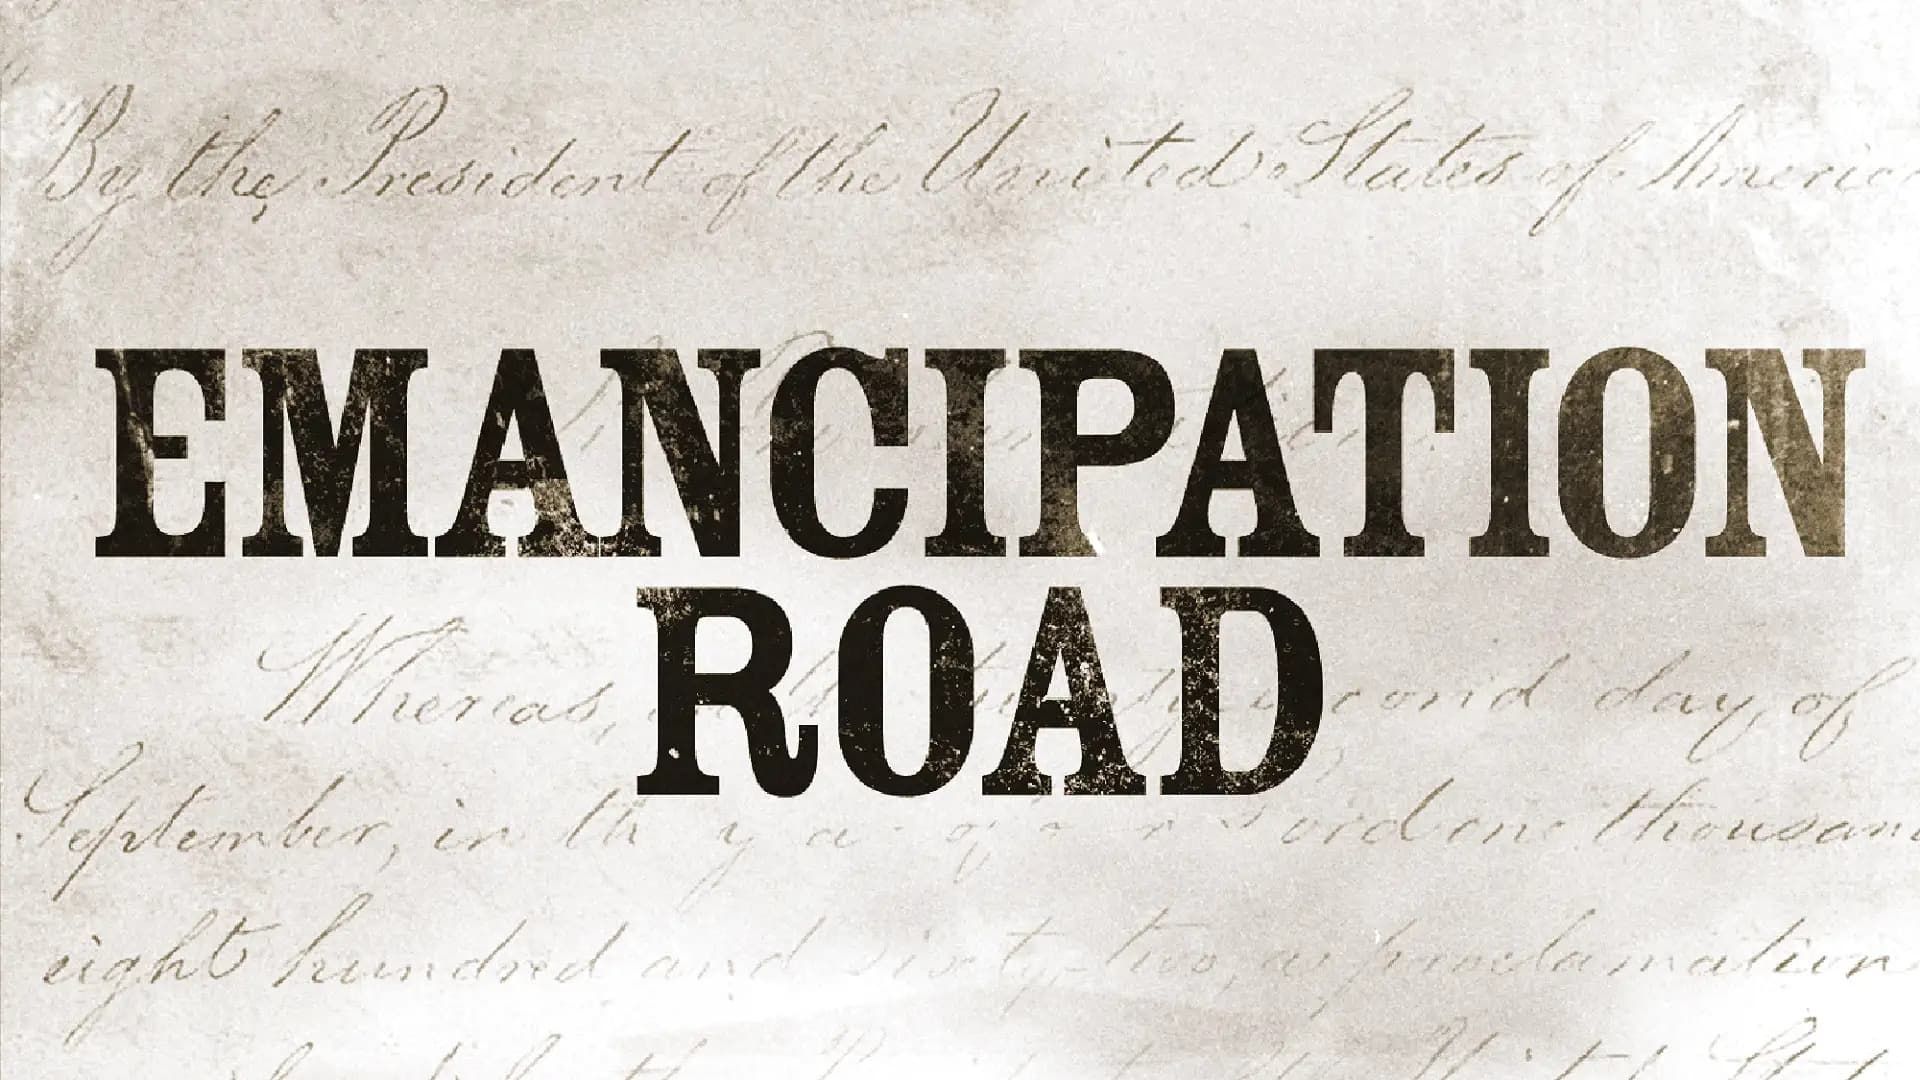 Emancipation Road background